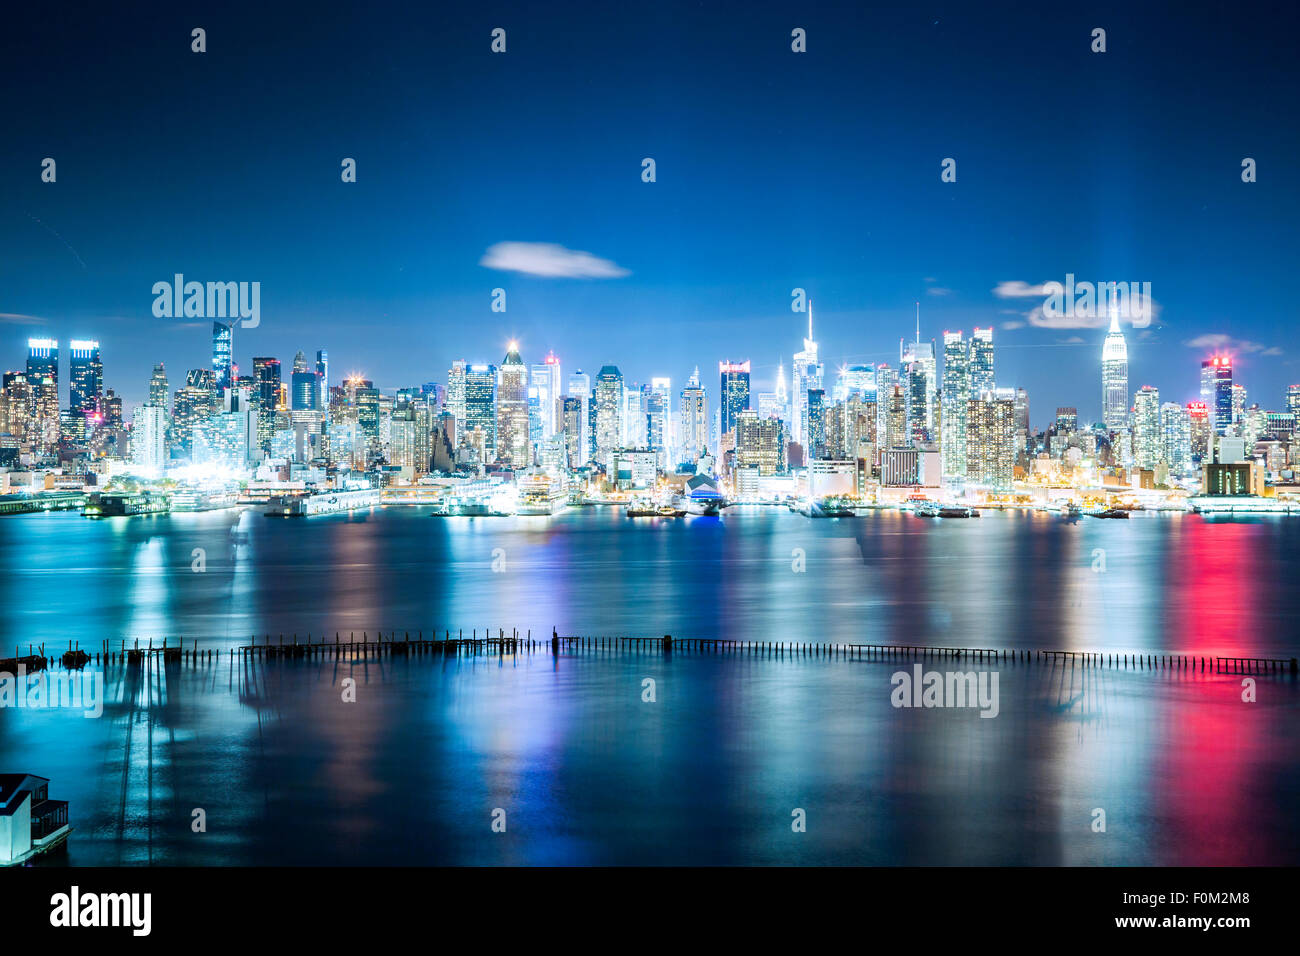 Skyline of Midtown Manhattan, New York, USA Stock Photo